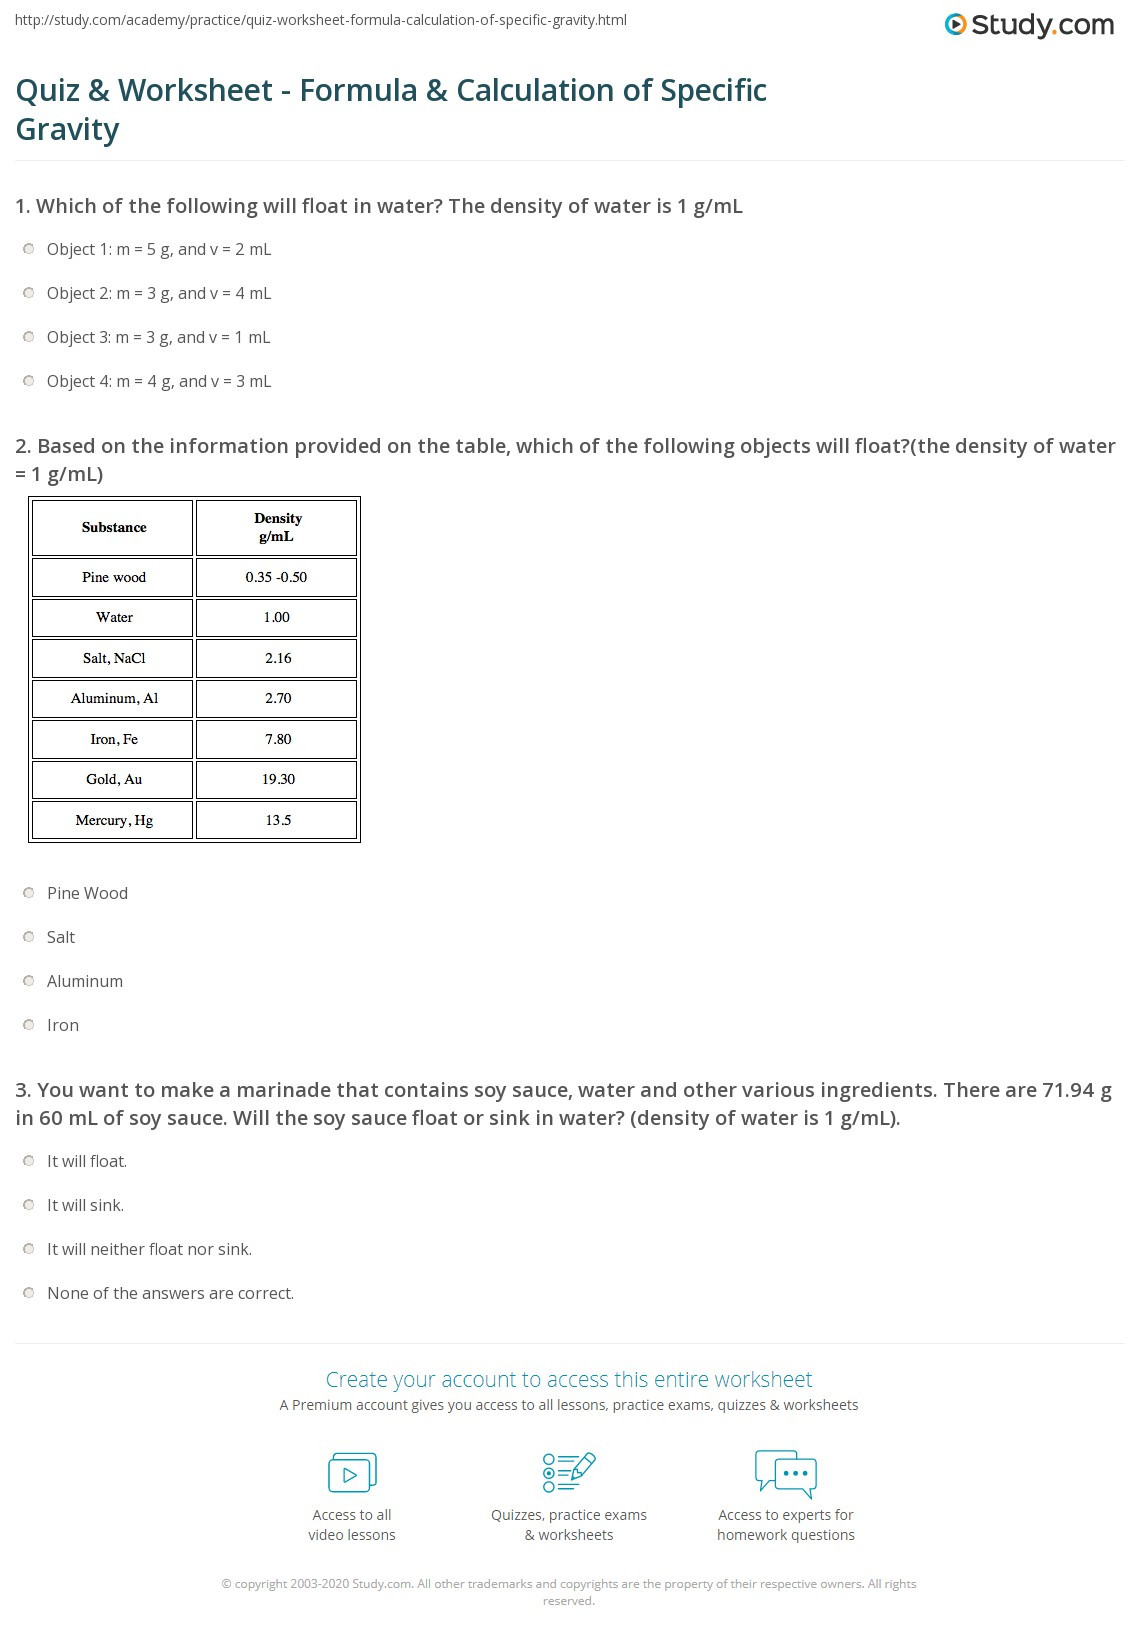 Density Practice Problem Worksheet Quiz &amp; Worksheet formula &amp; Calculation Of Specific Gravity